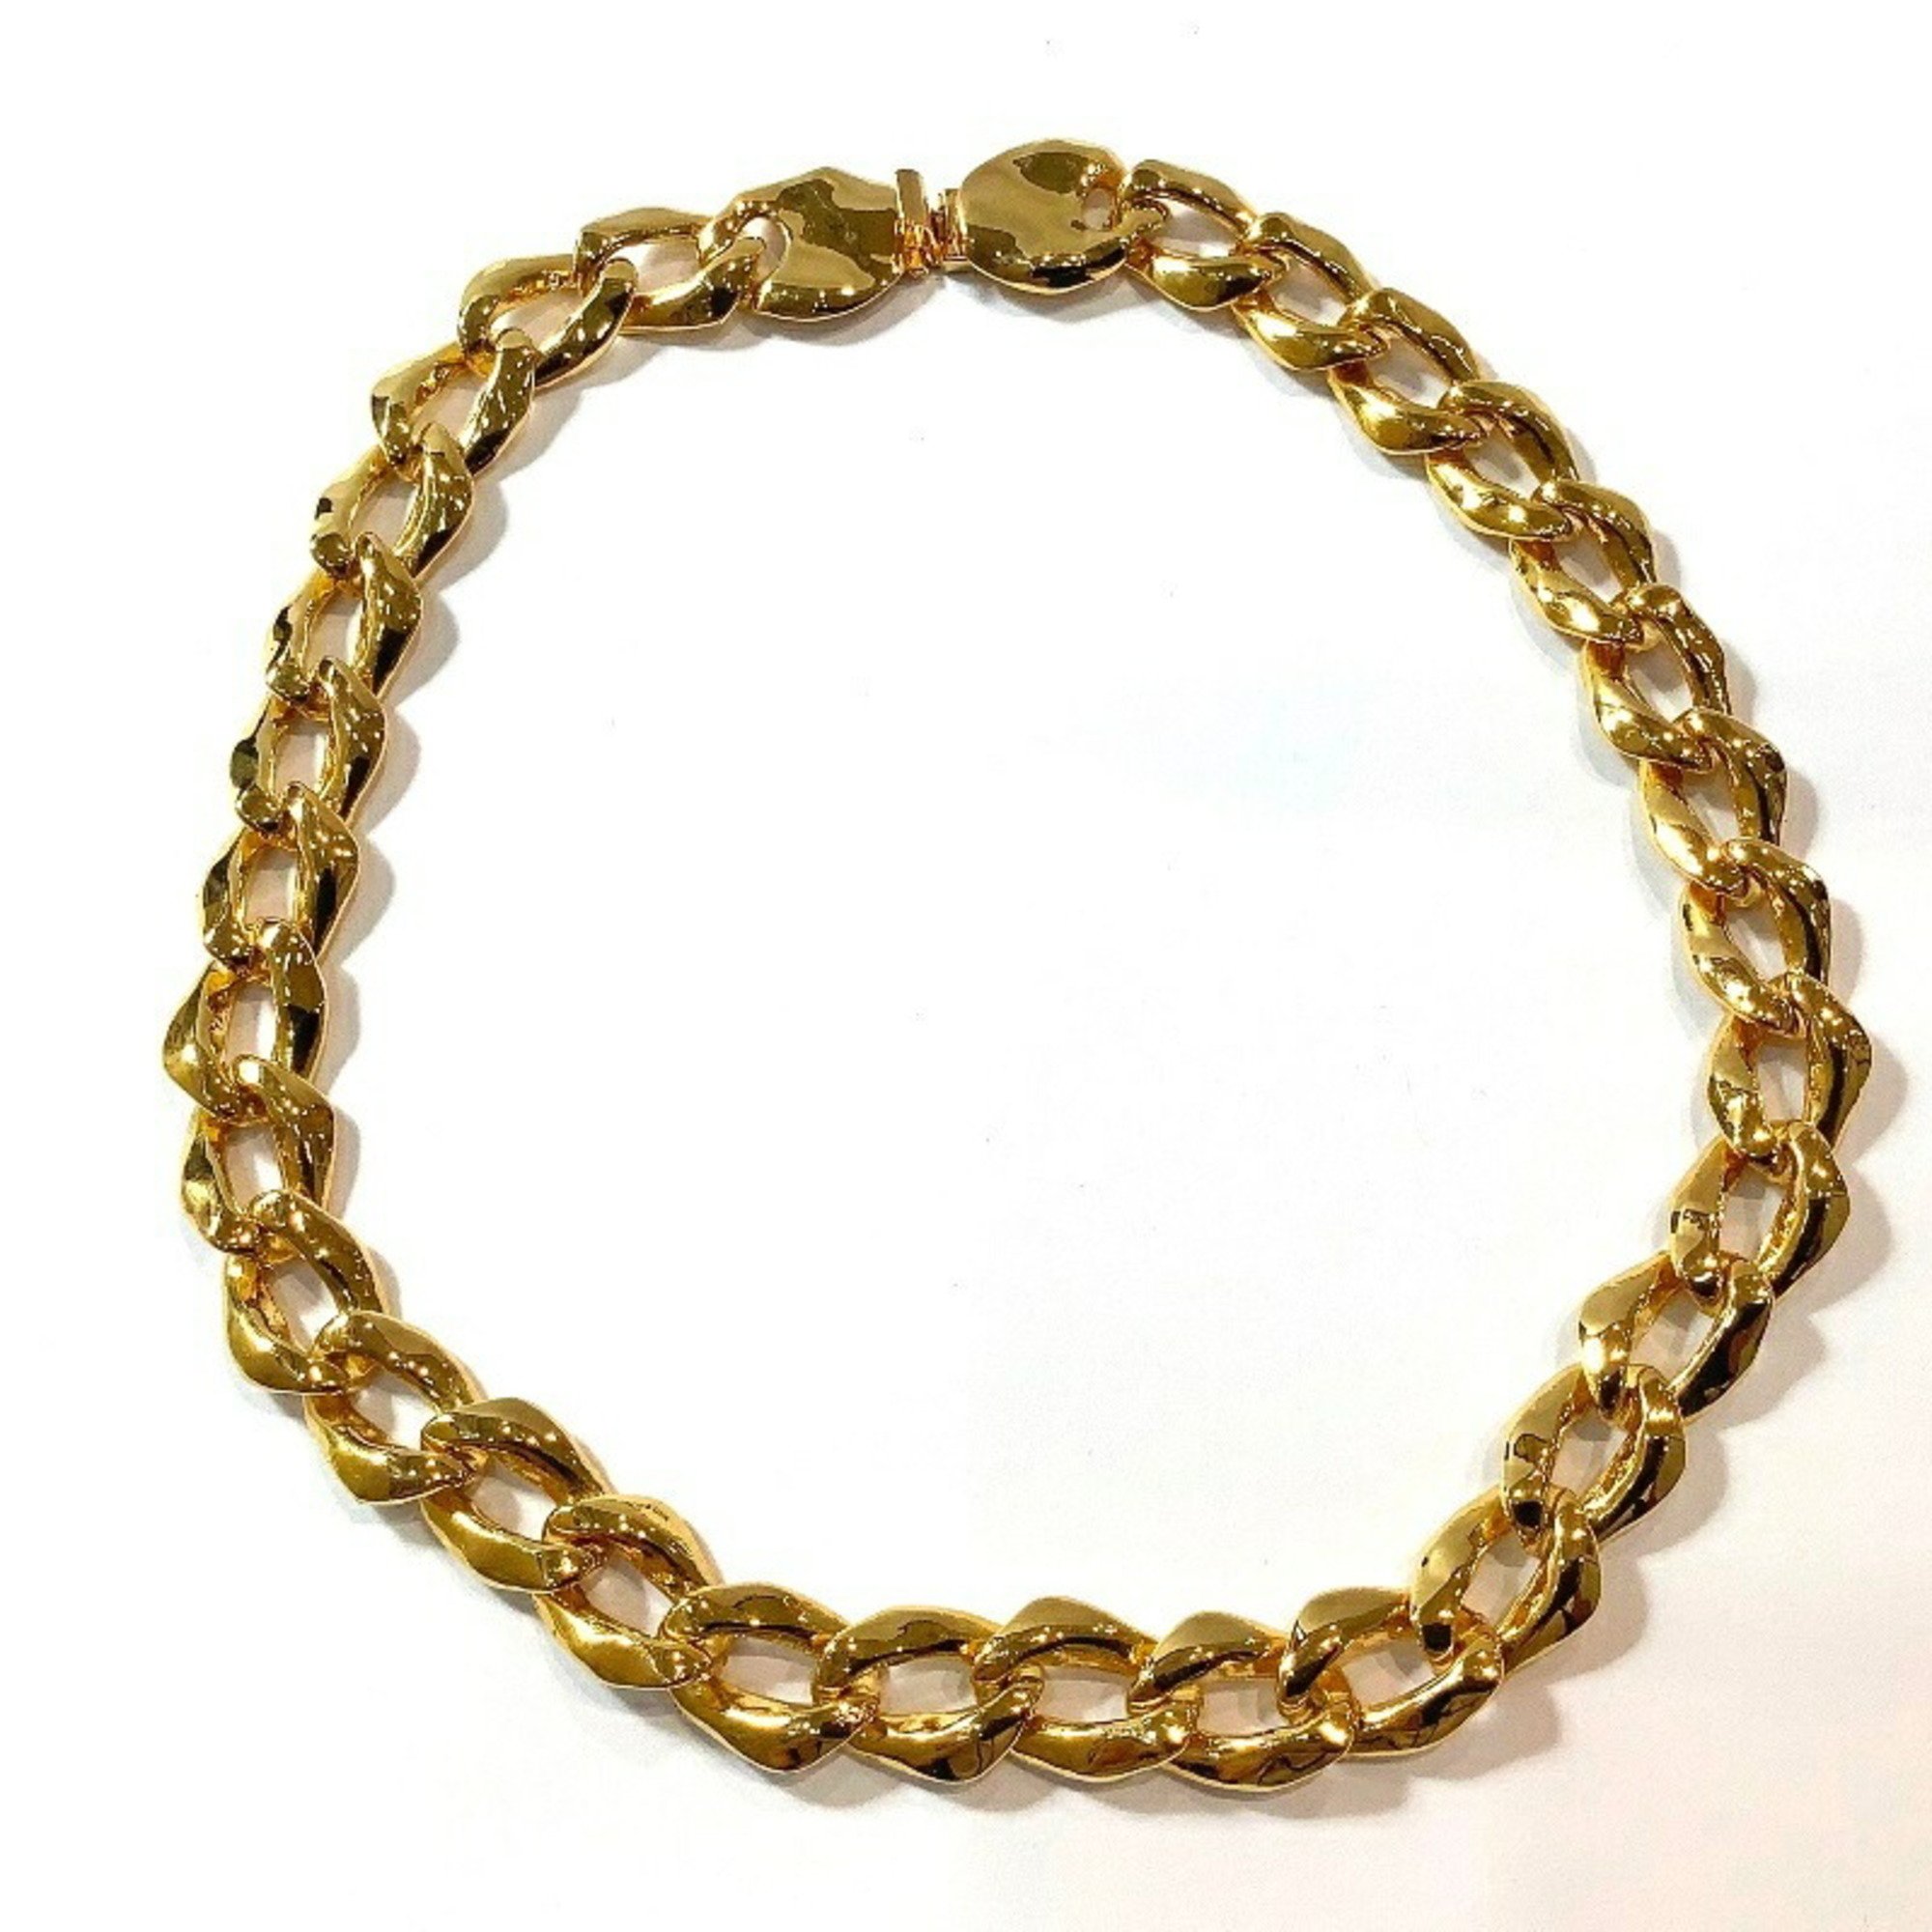 Yves Saint Laurent (YVES SAINT LAURENT) YSL Chain motif necklace and bracelet set, in one long necklace, gold color, KB-8427